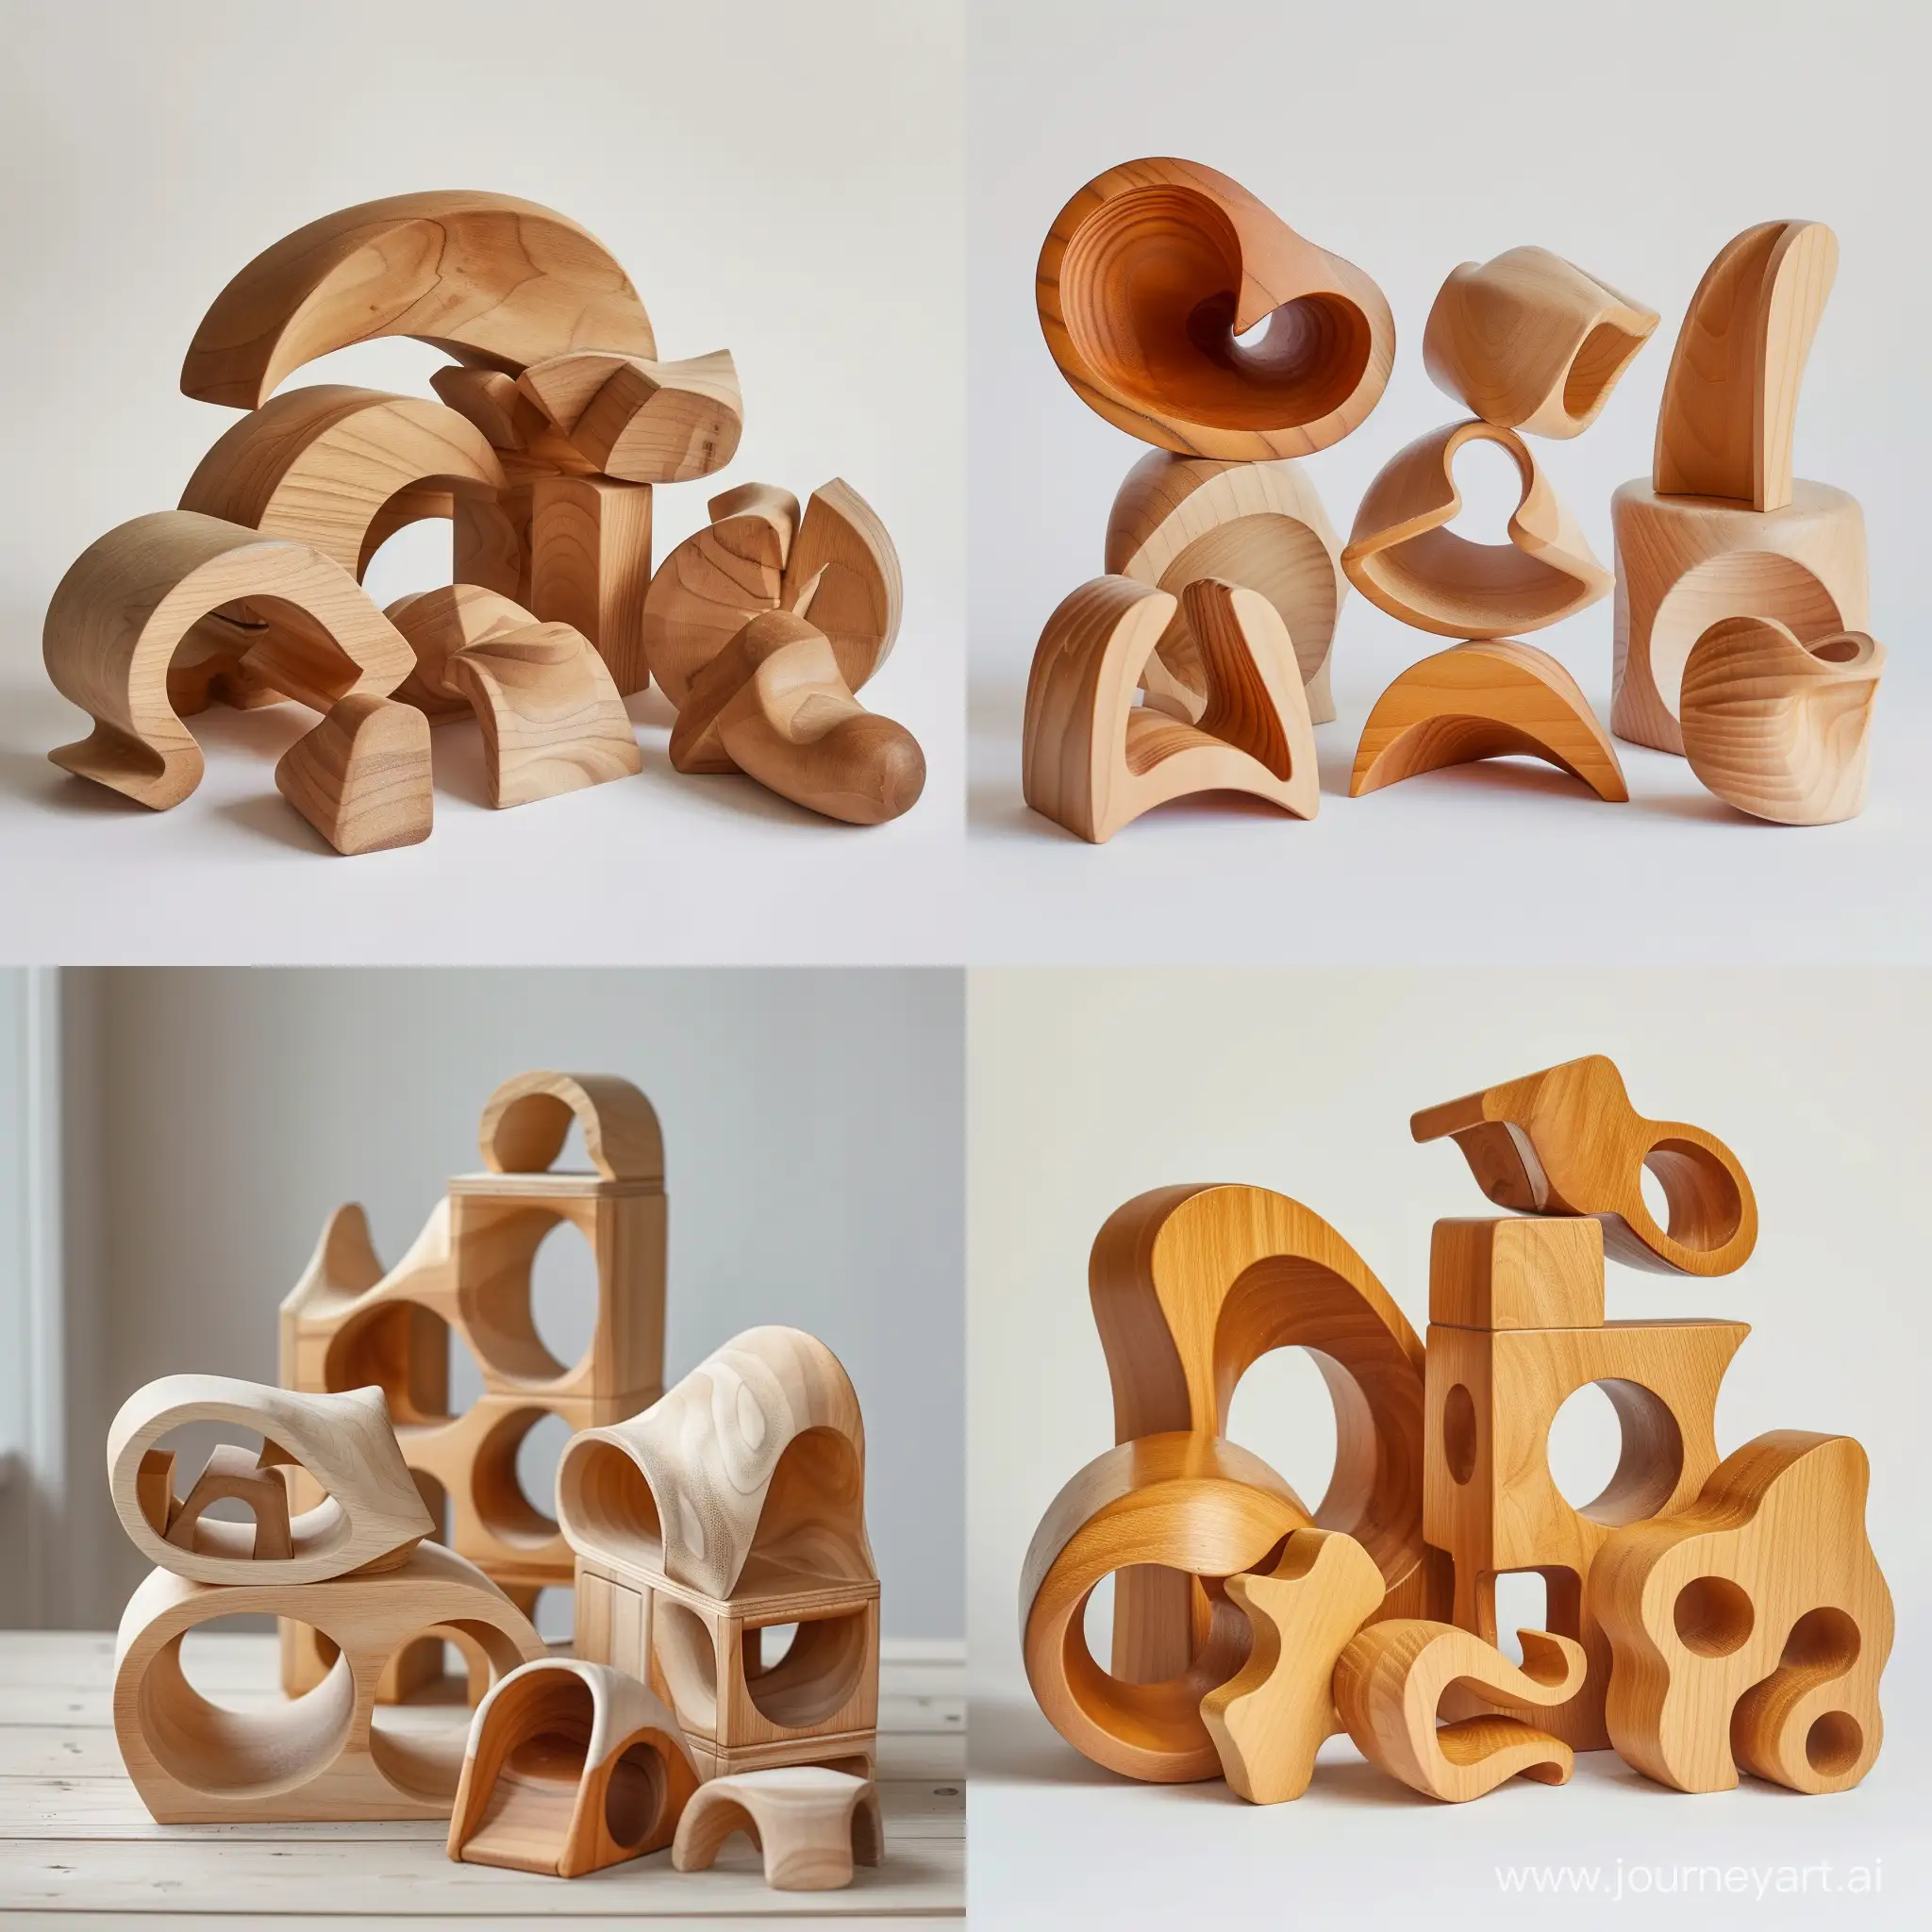 Bauhaus-Inspired-Wooden-Toy-Construction-Kit